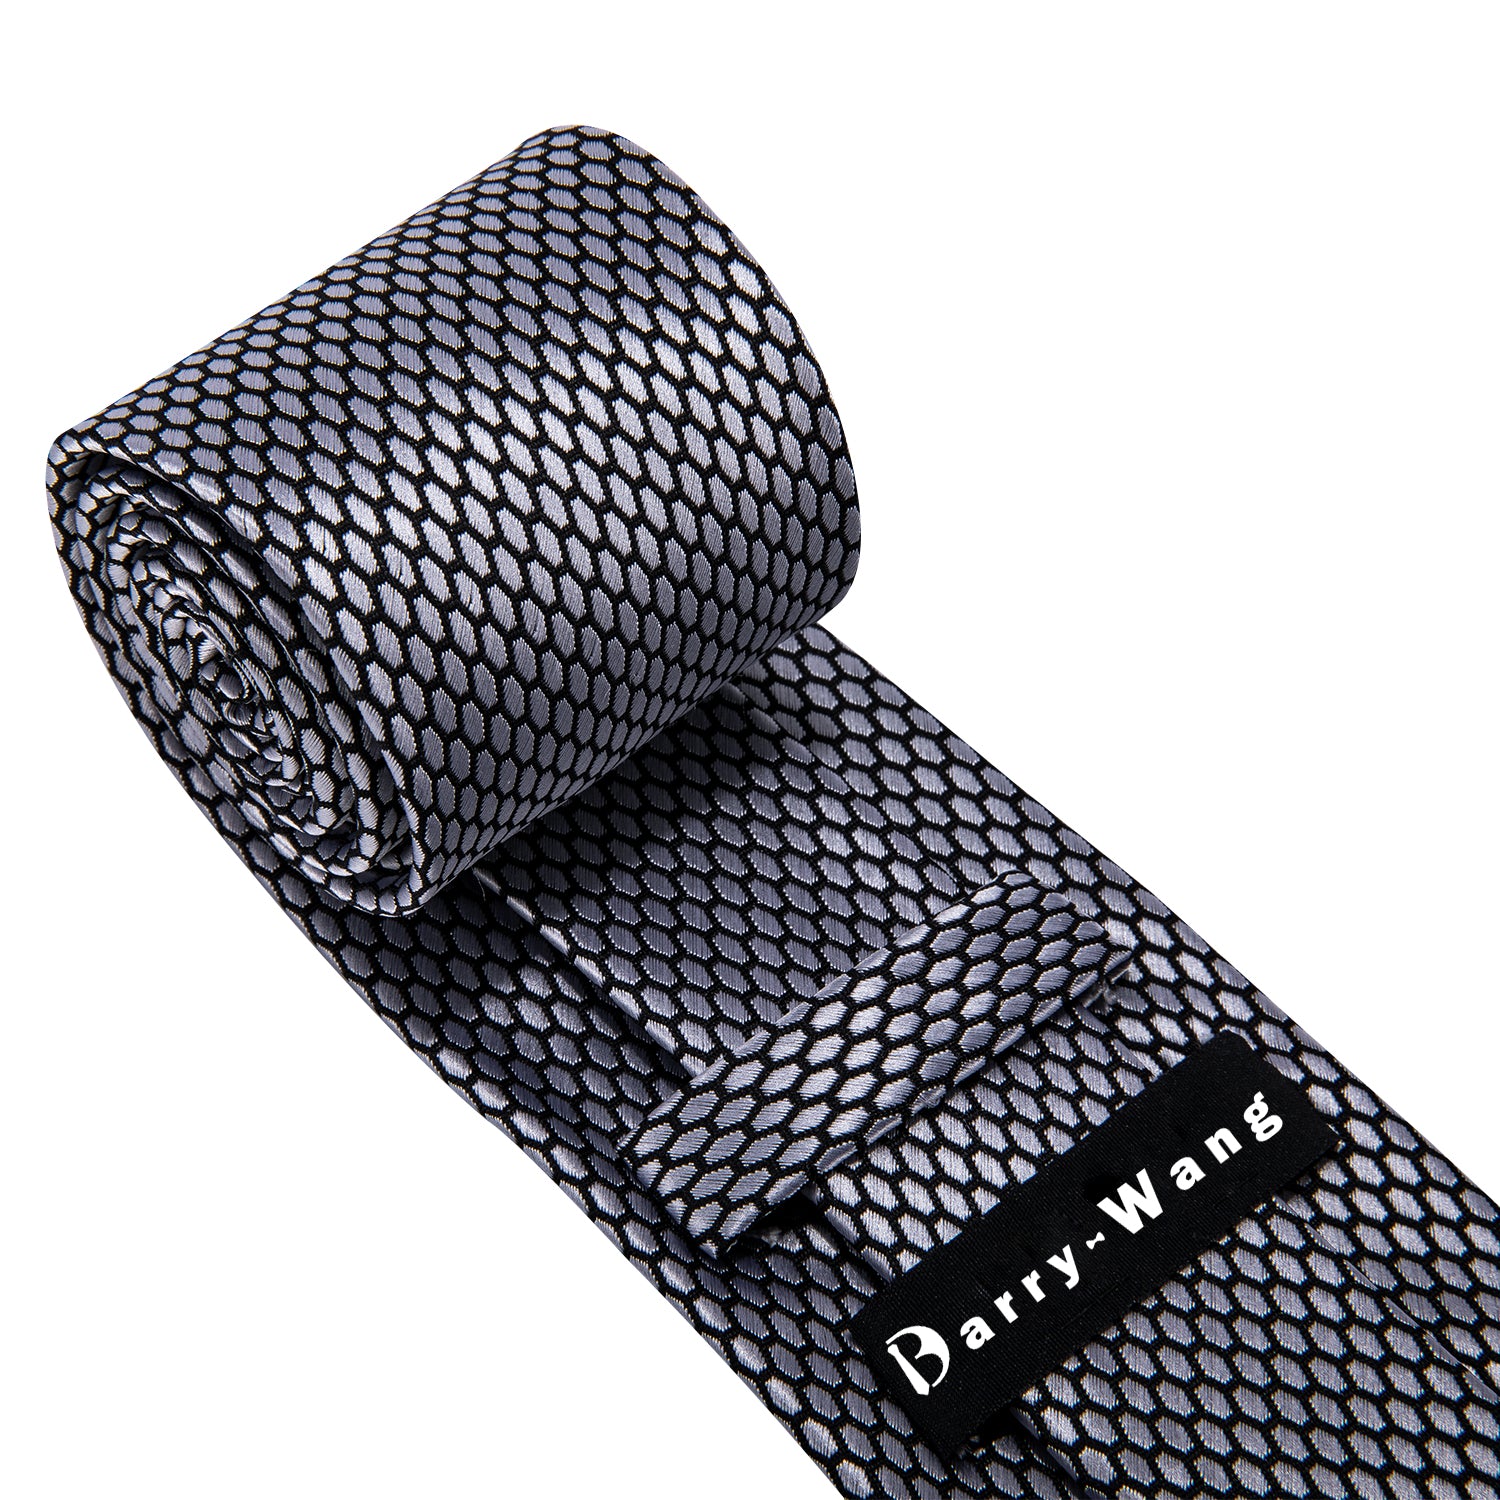 Barry.wang Grey Tie Geometric Plaid Men's Tie Pocket Square Cufflinks Set